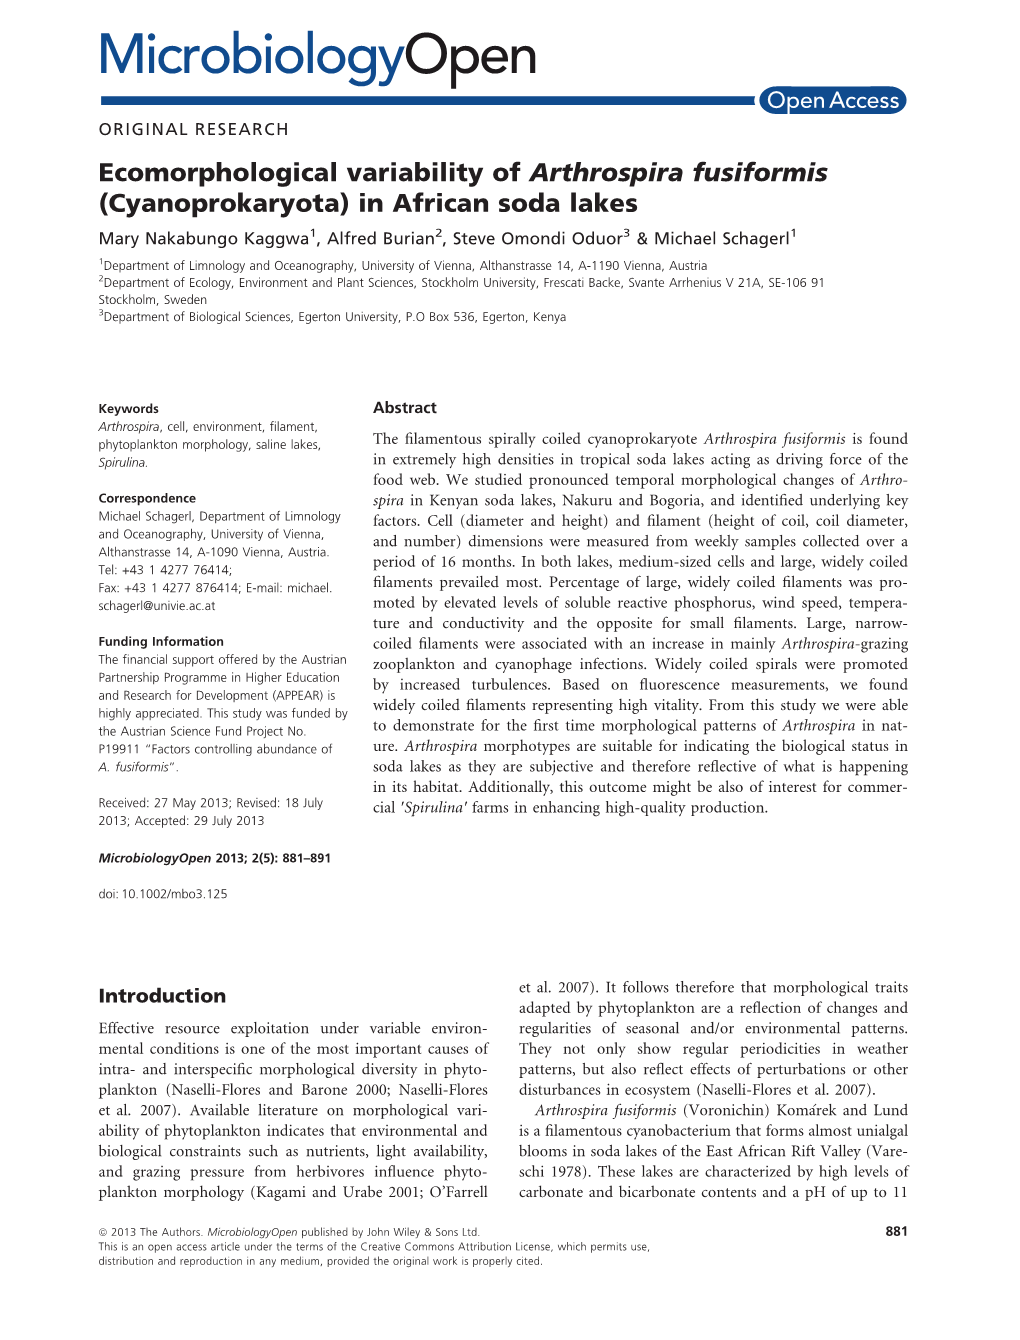 Ecomorphological Variability of Arthrospira Fusiformis (Cyanoprokaryota) in African Soda Lakes